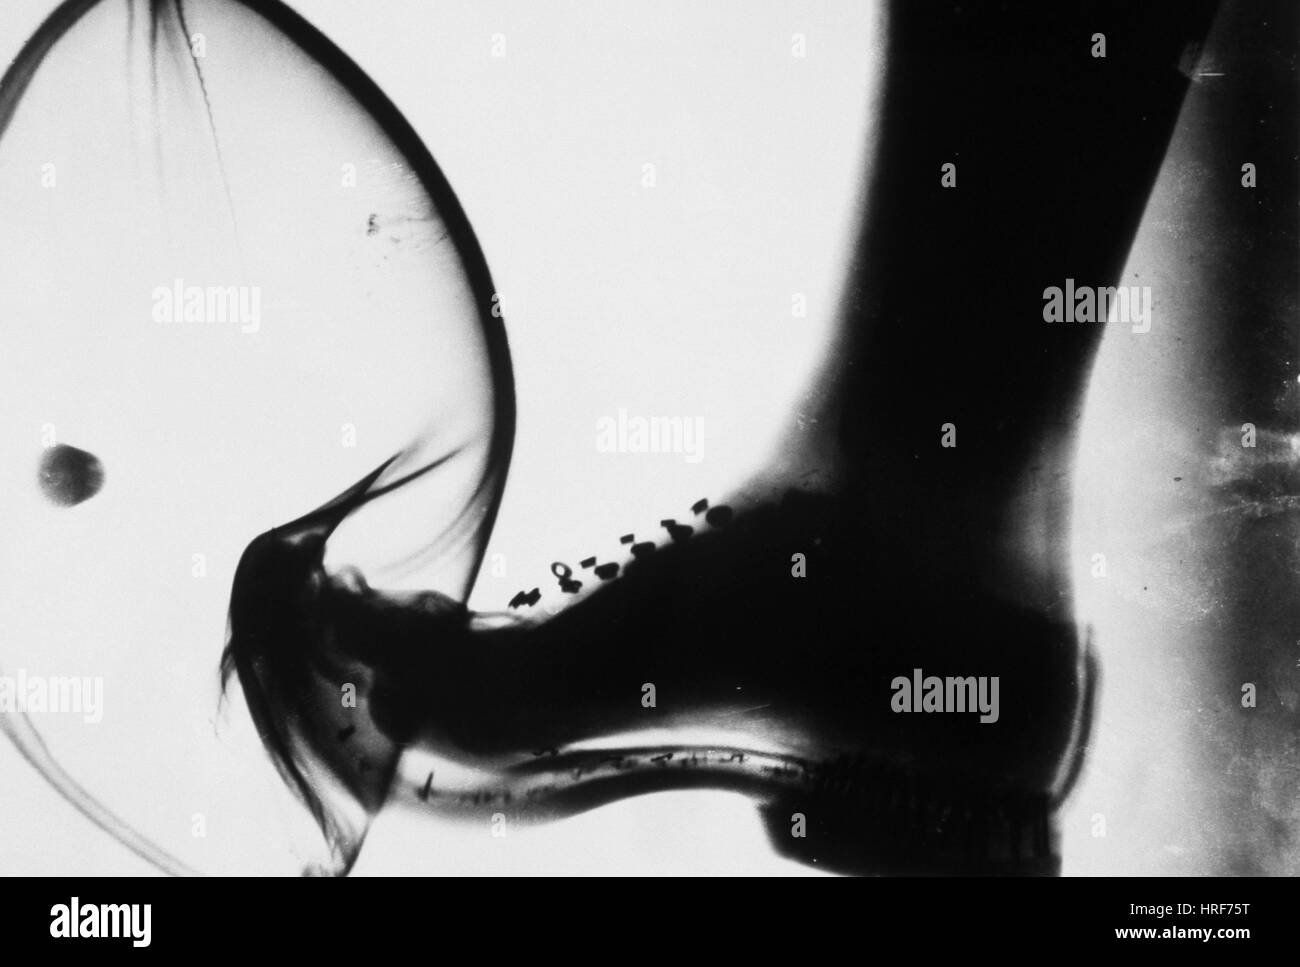 Kicking a Ball, X-ray Stock Photo - Alamy